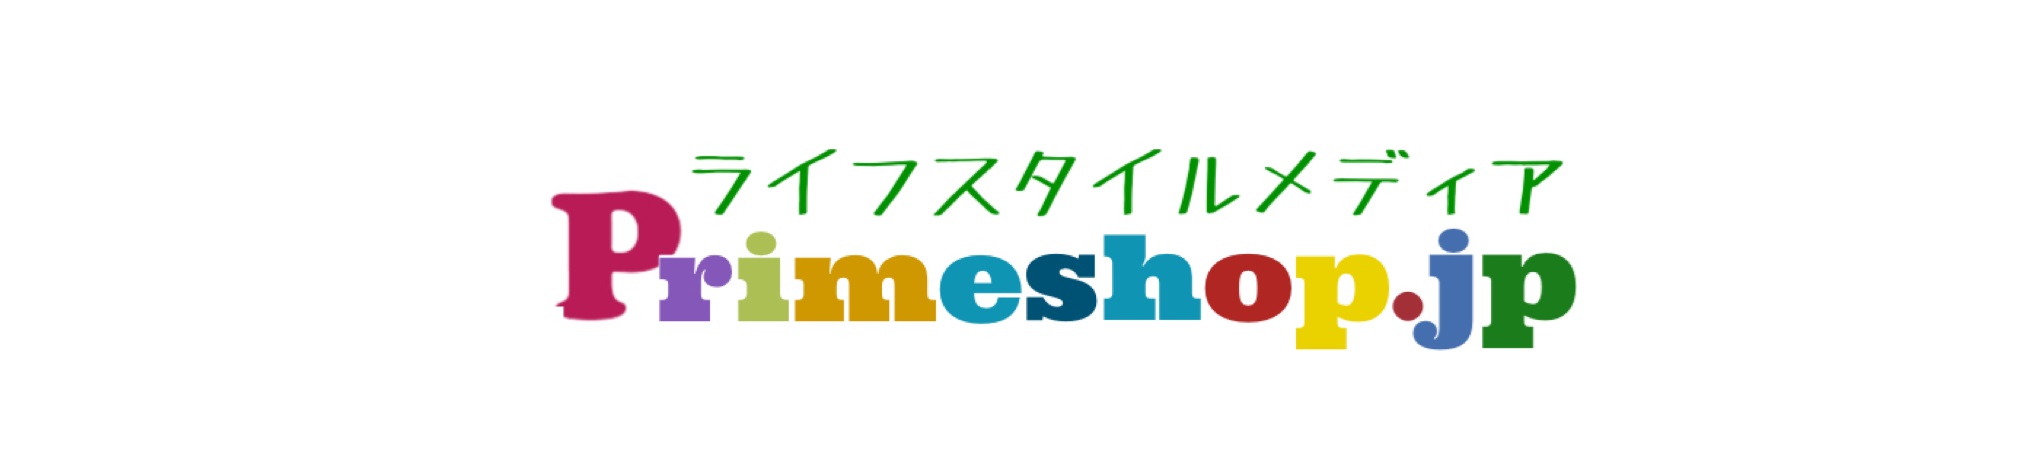 Primeshop-jp banner